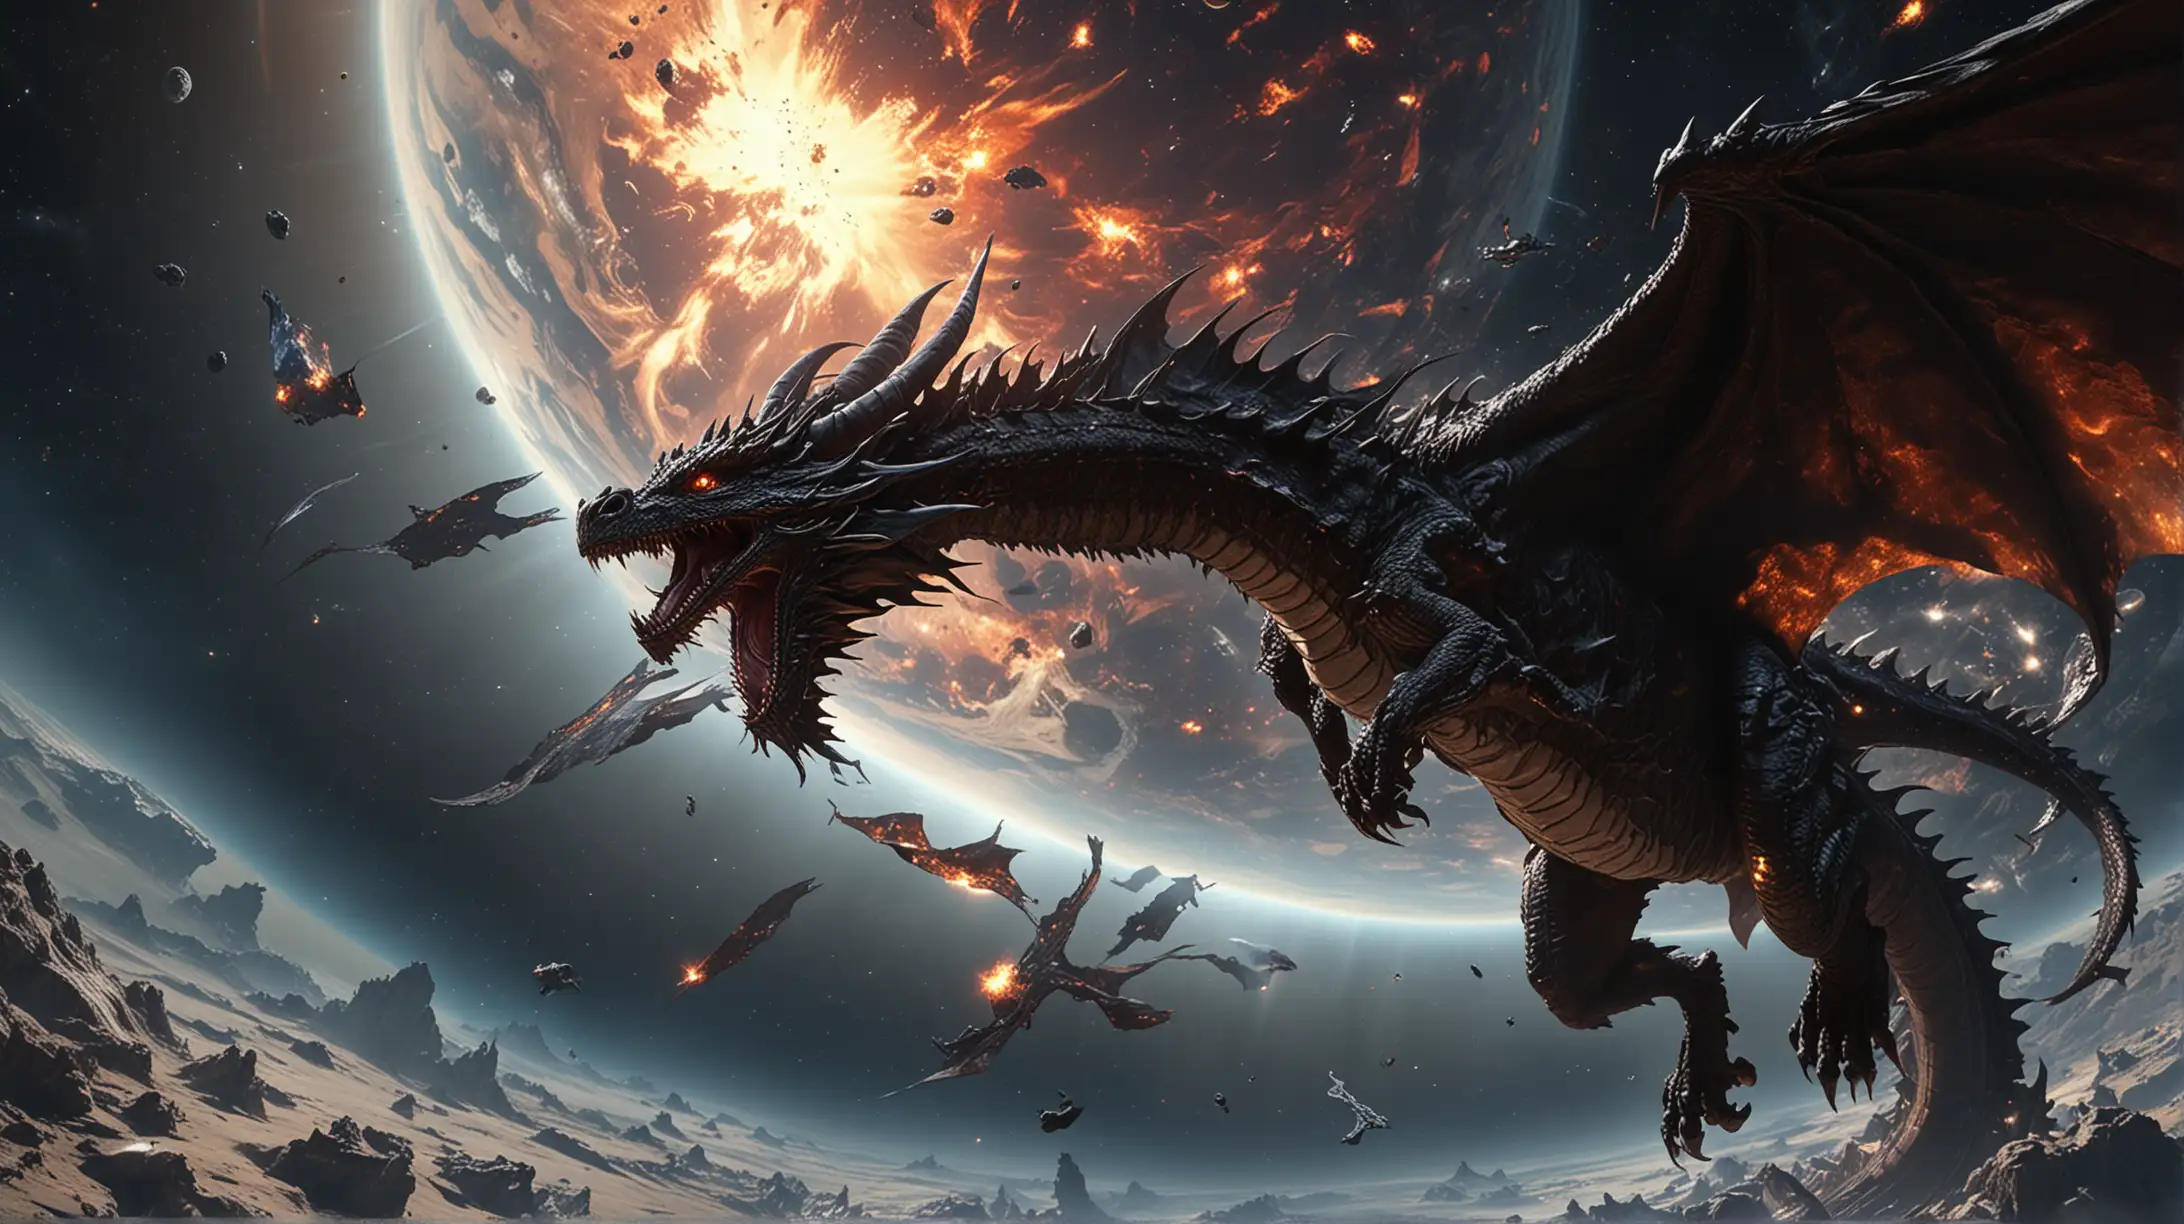 Majestic Black Dragon Flying Over Earth in Hyperrealistic 8K Ultra HD